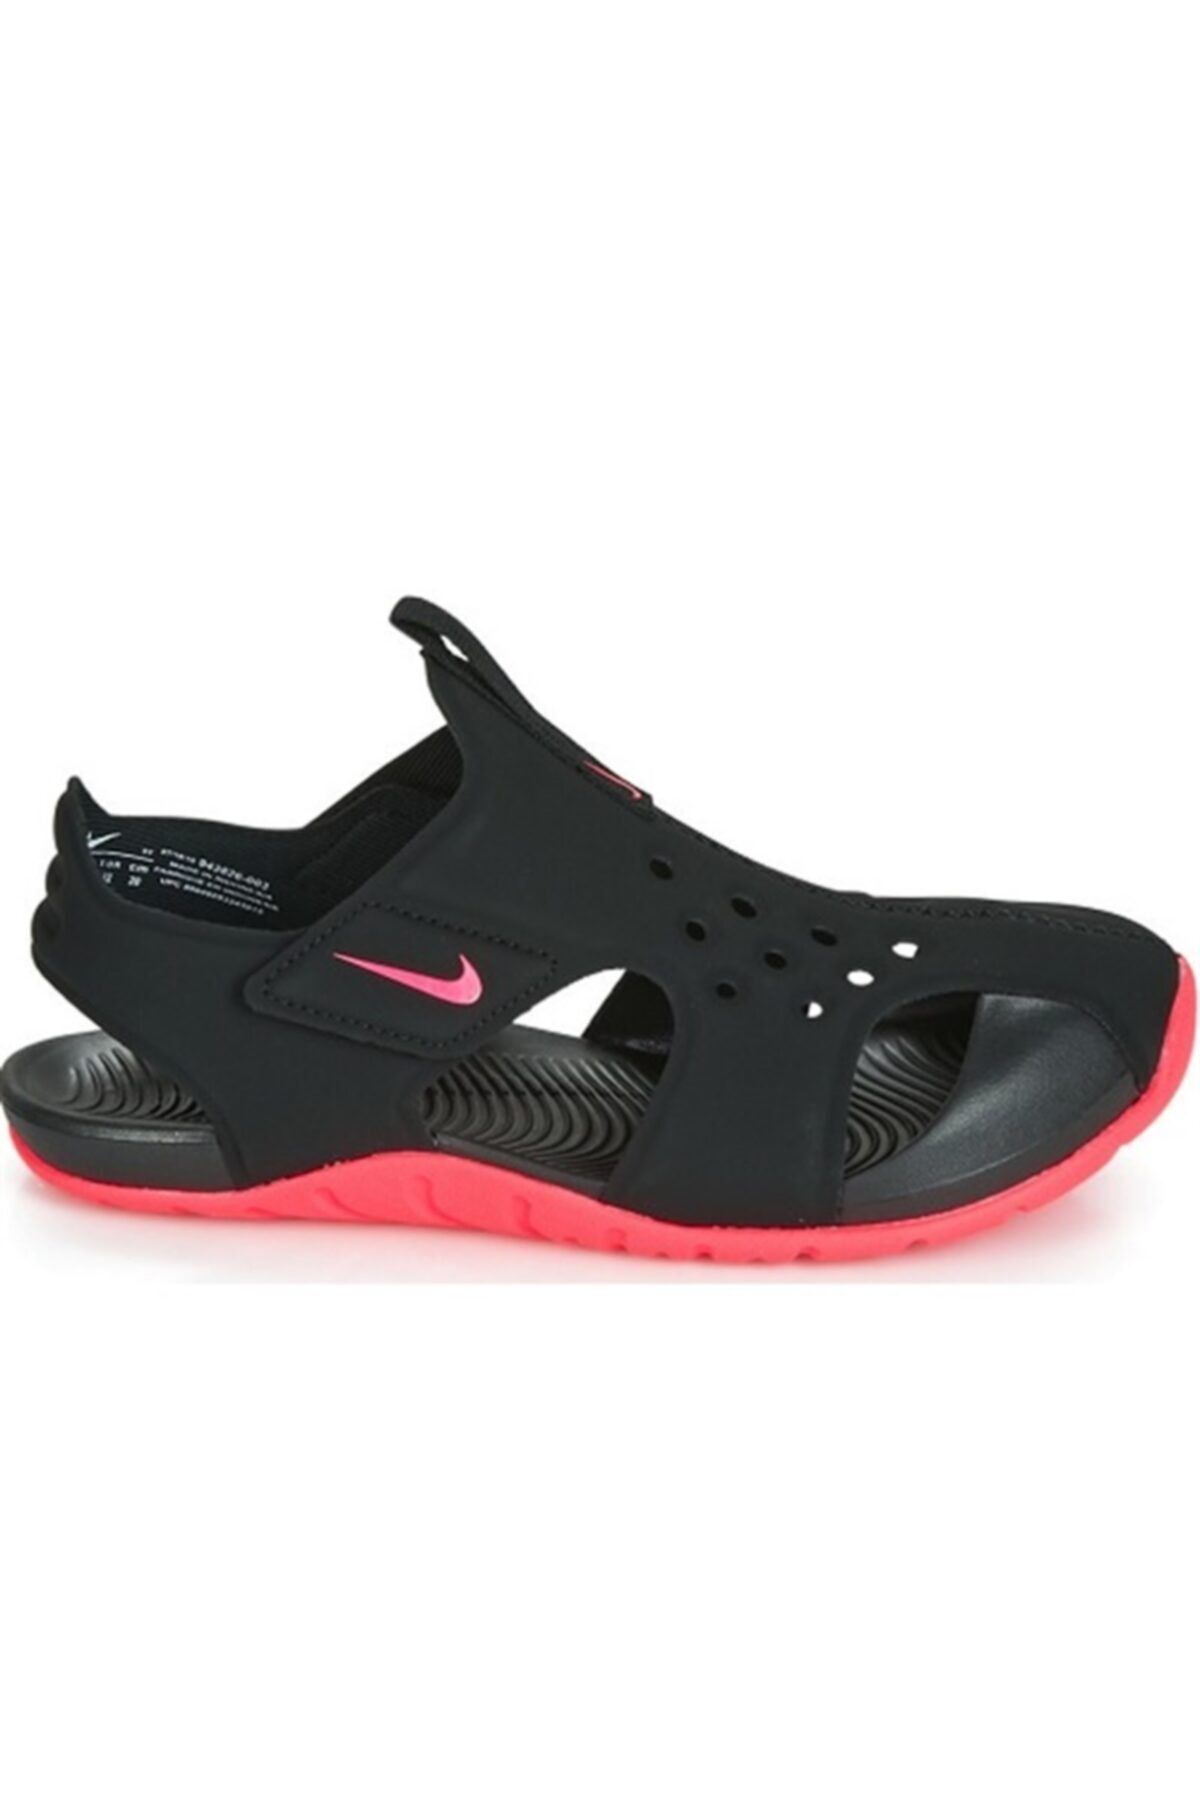 Nike Nıke 943826-003 Sunray Protect 2 (ps) Çocuk Sandalet Siyah Pembe